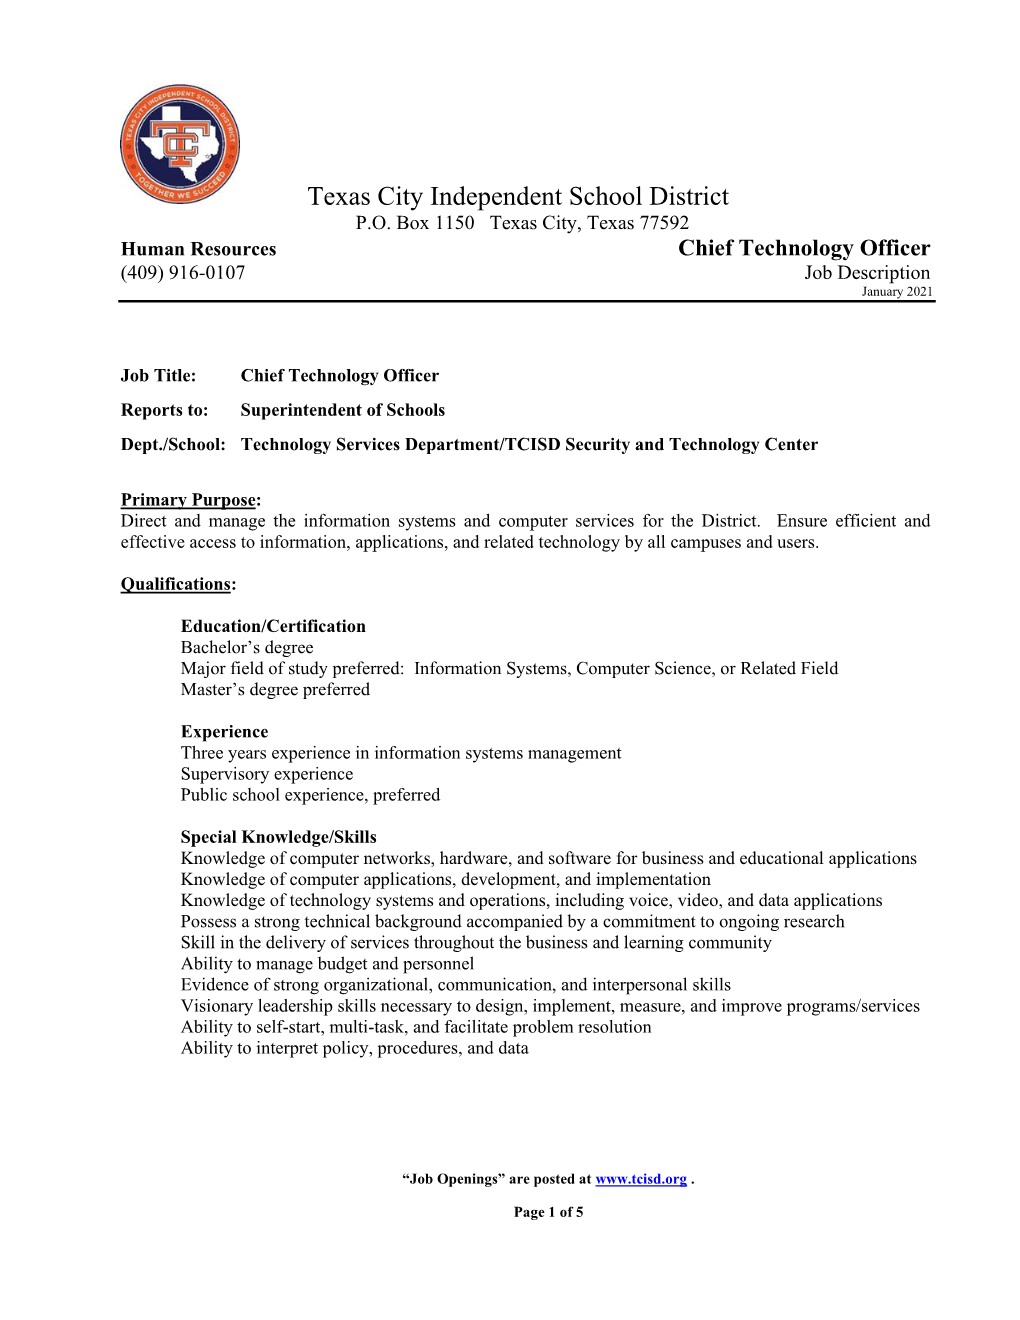 Chief Technology Officer (409) 916-0107 Job Description January 2021